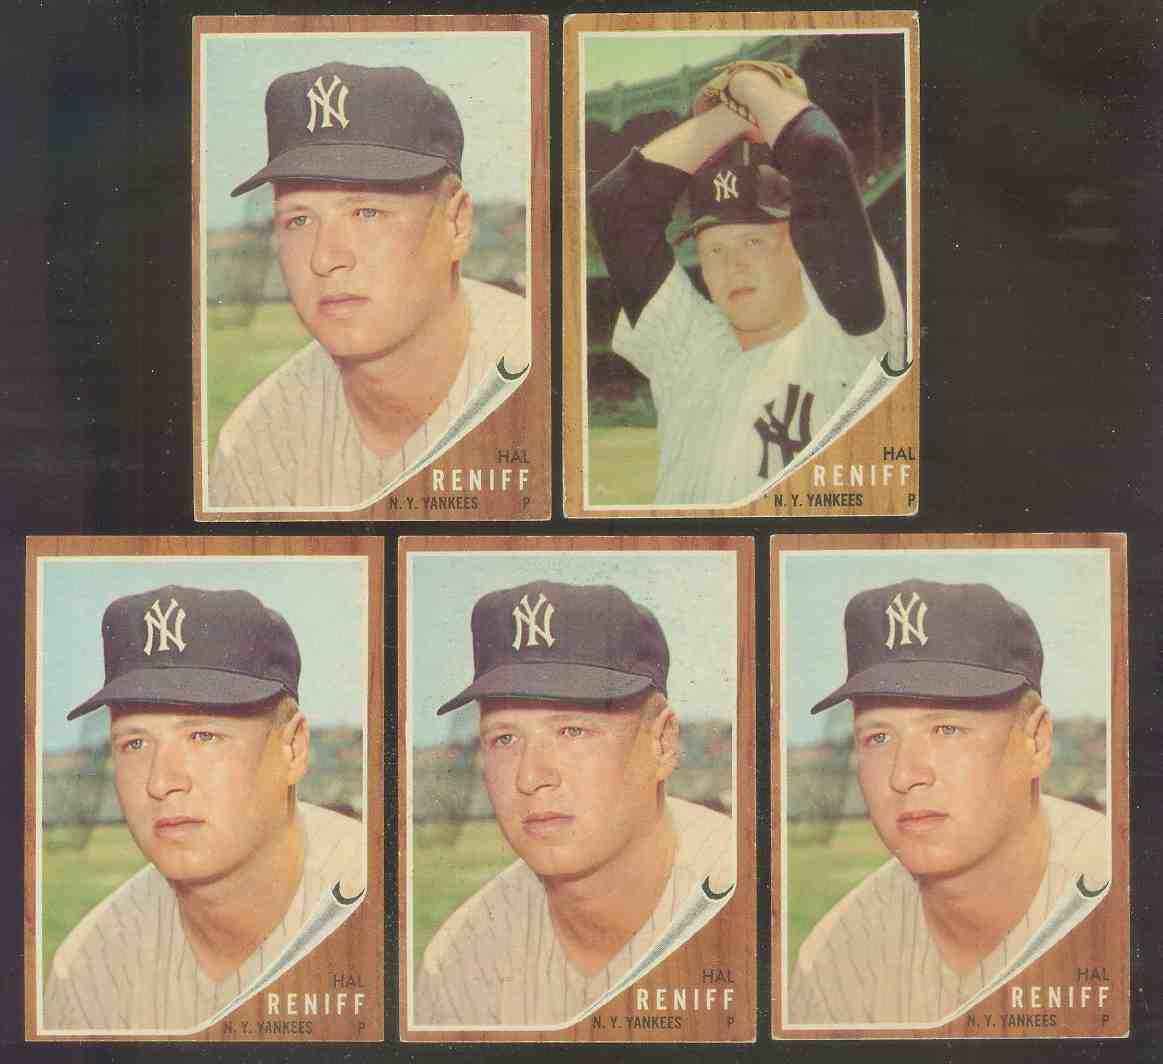 1962 Topps #139B Hal Reniff ROOKIE [VAR:Portrait) (Yankees) Baseball cards value